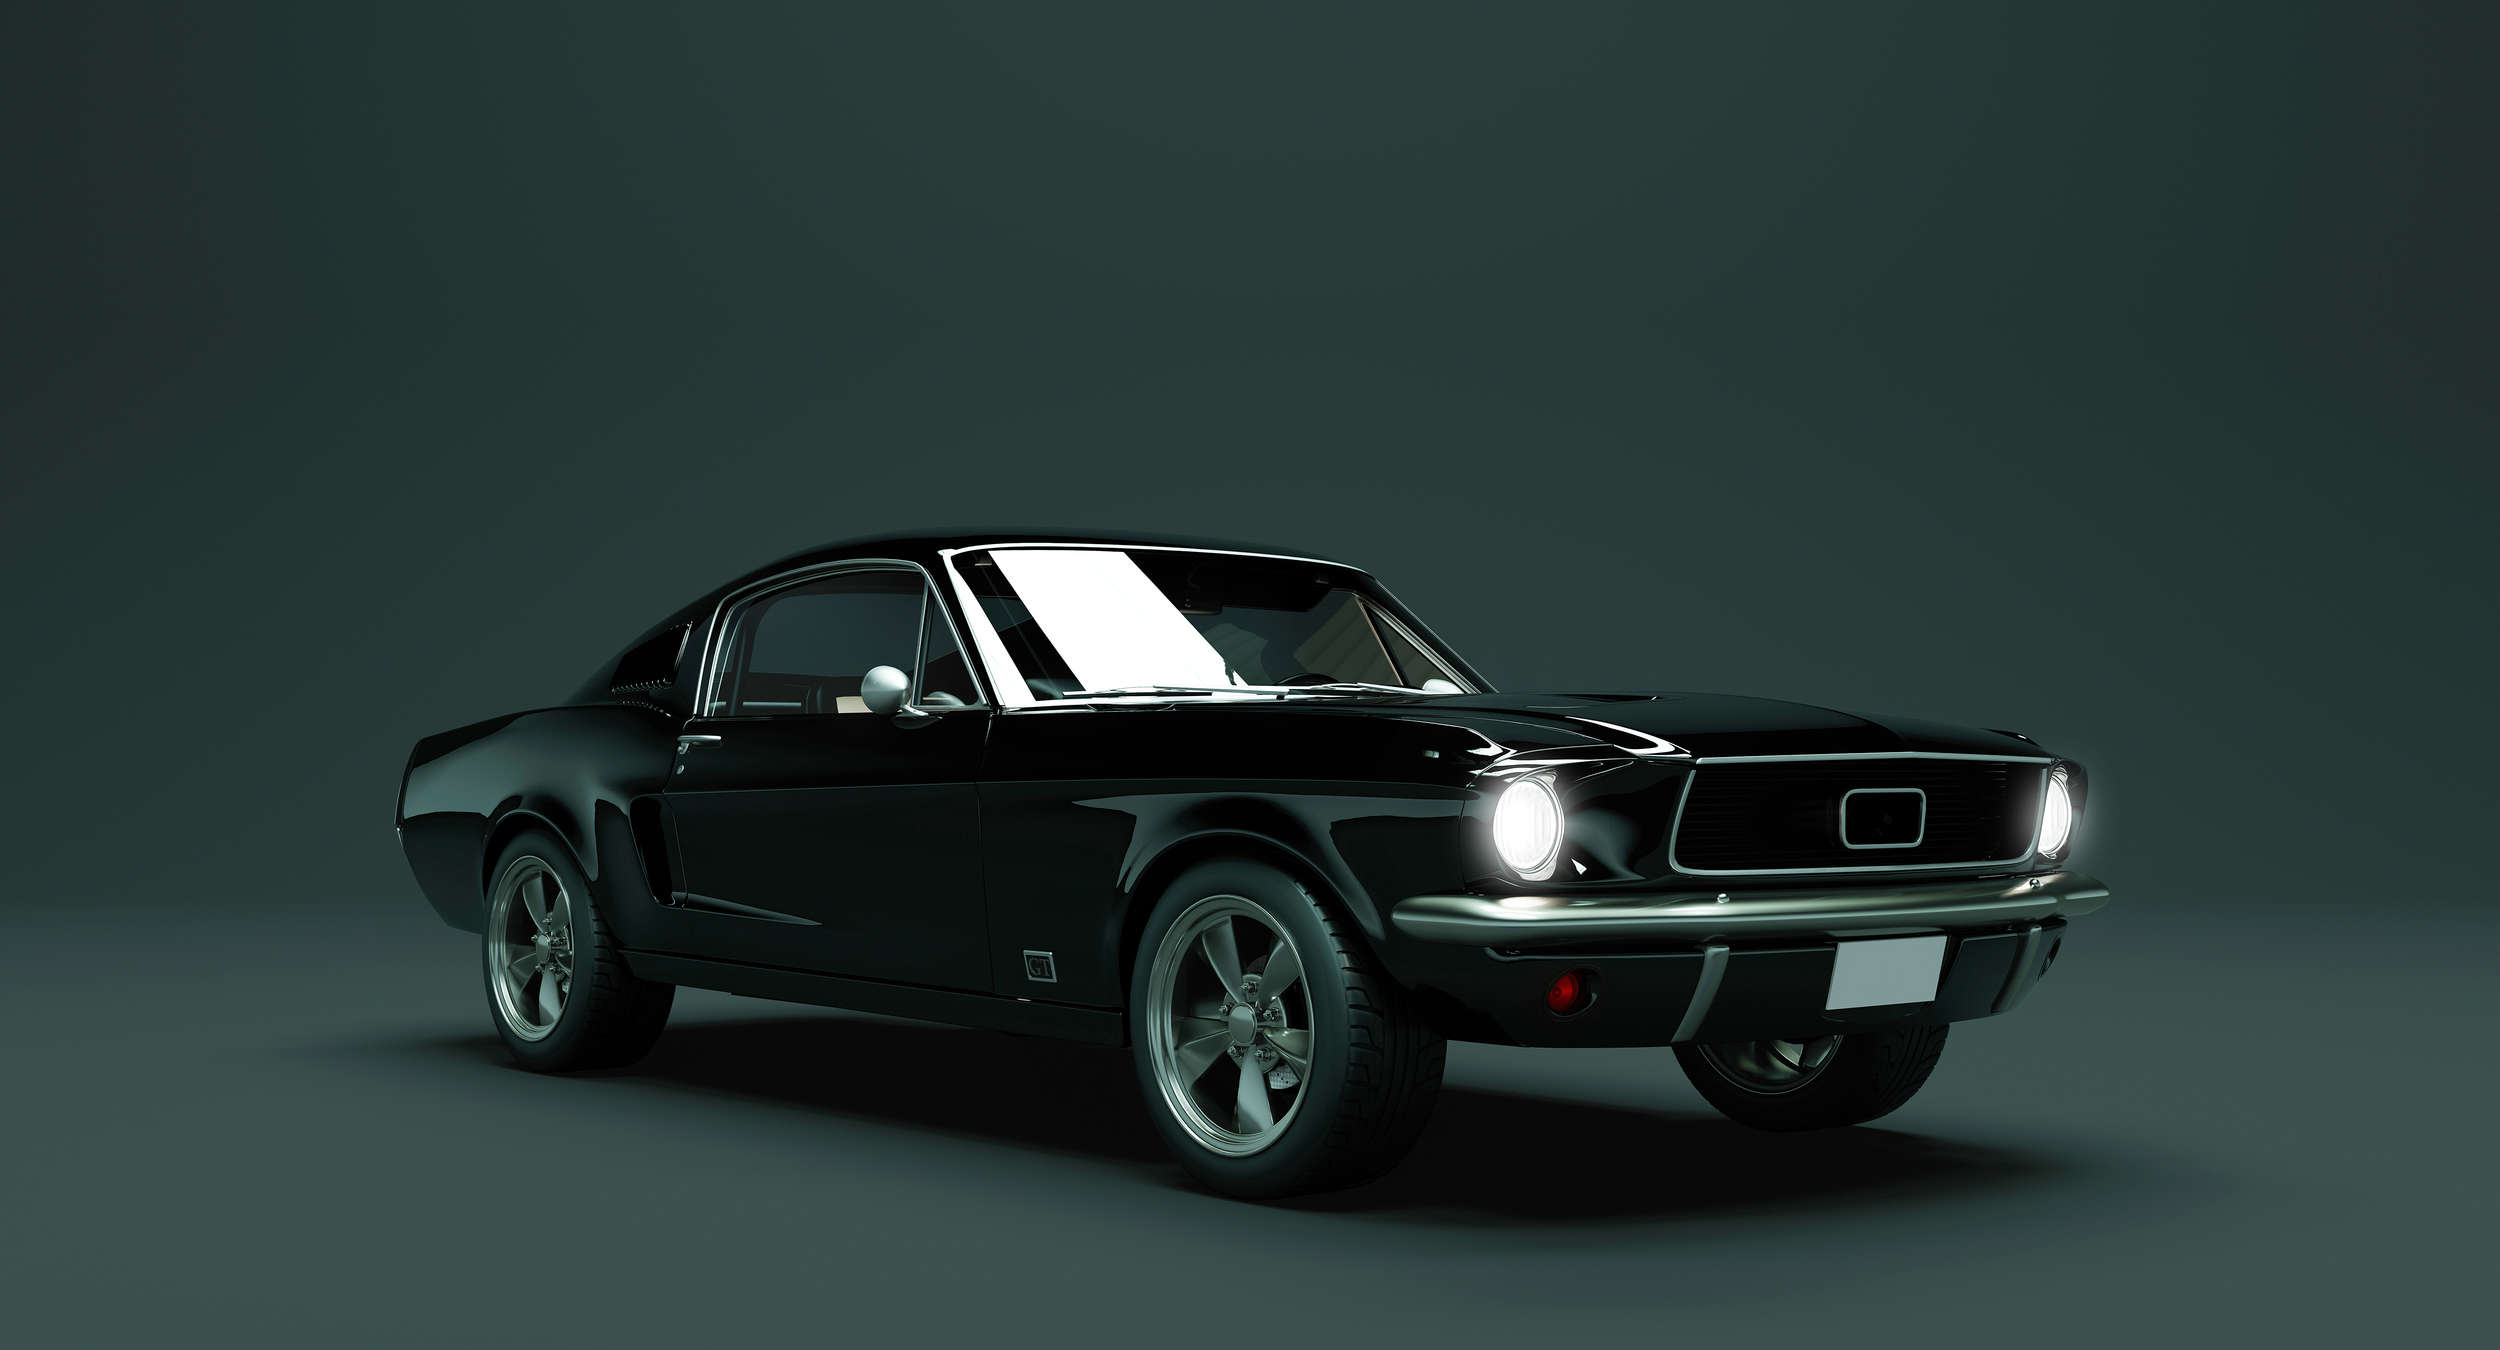             Mustang 2 - Digital behang, Mustang 1968 Vintage Car - Blauw, Zwart | Strukturenvlies
        